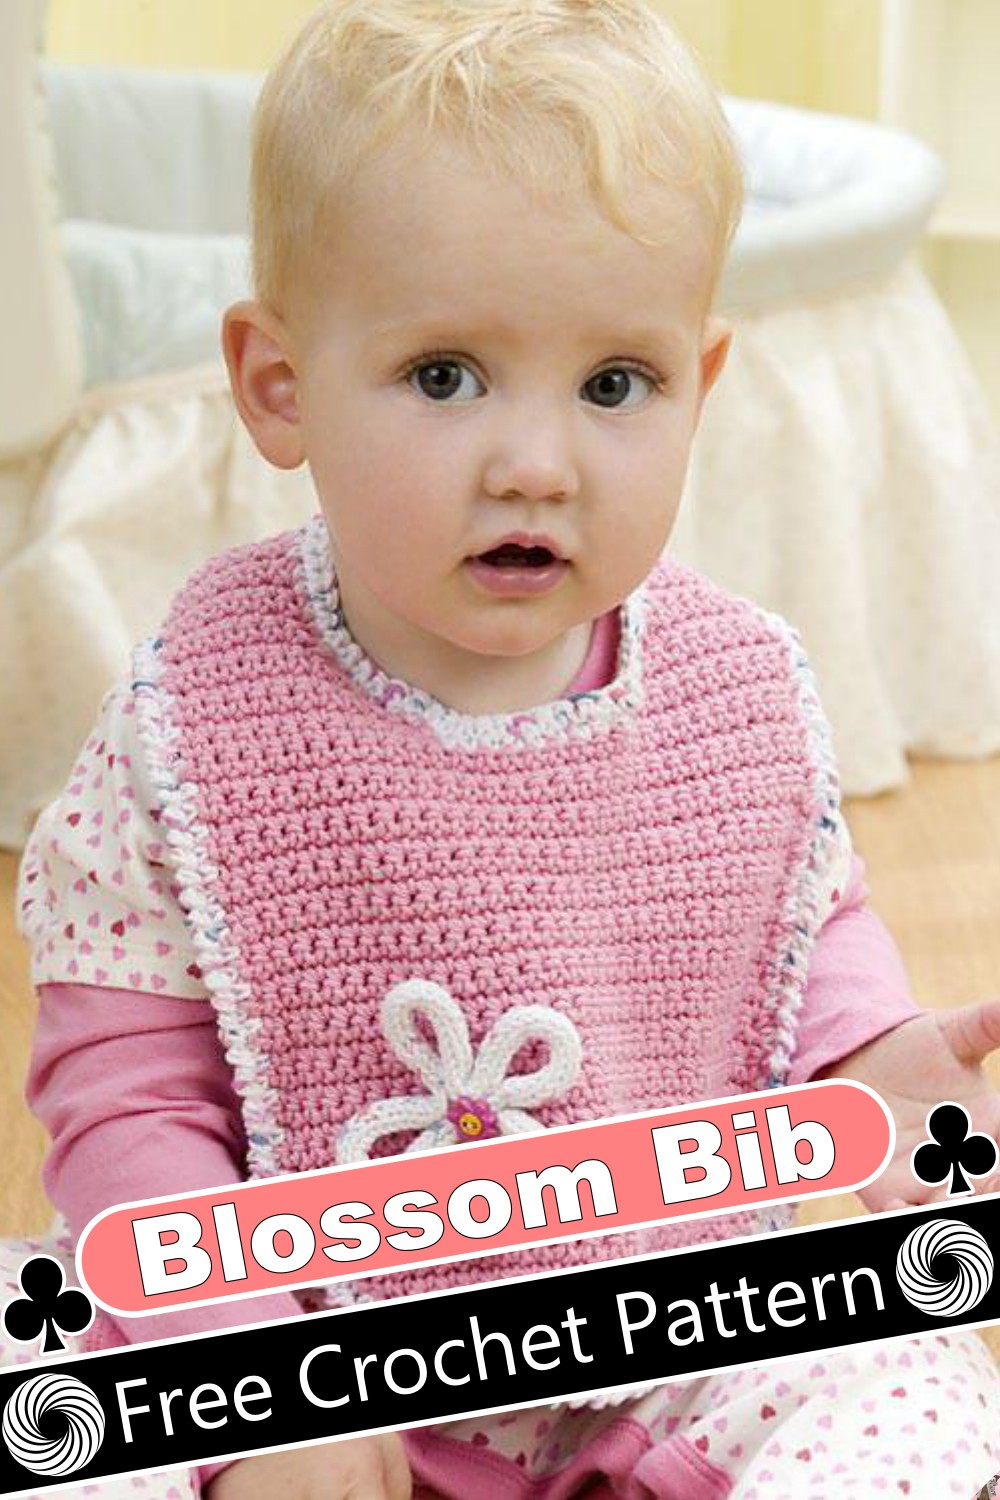 Blossom Bib